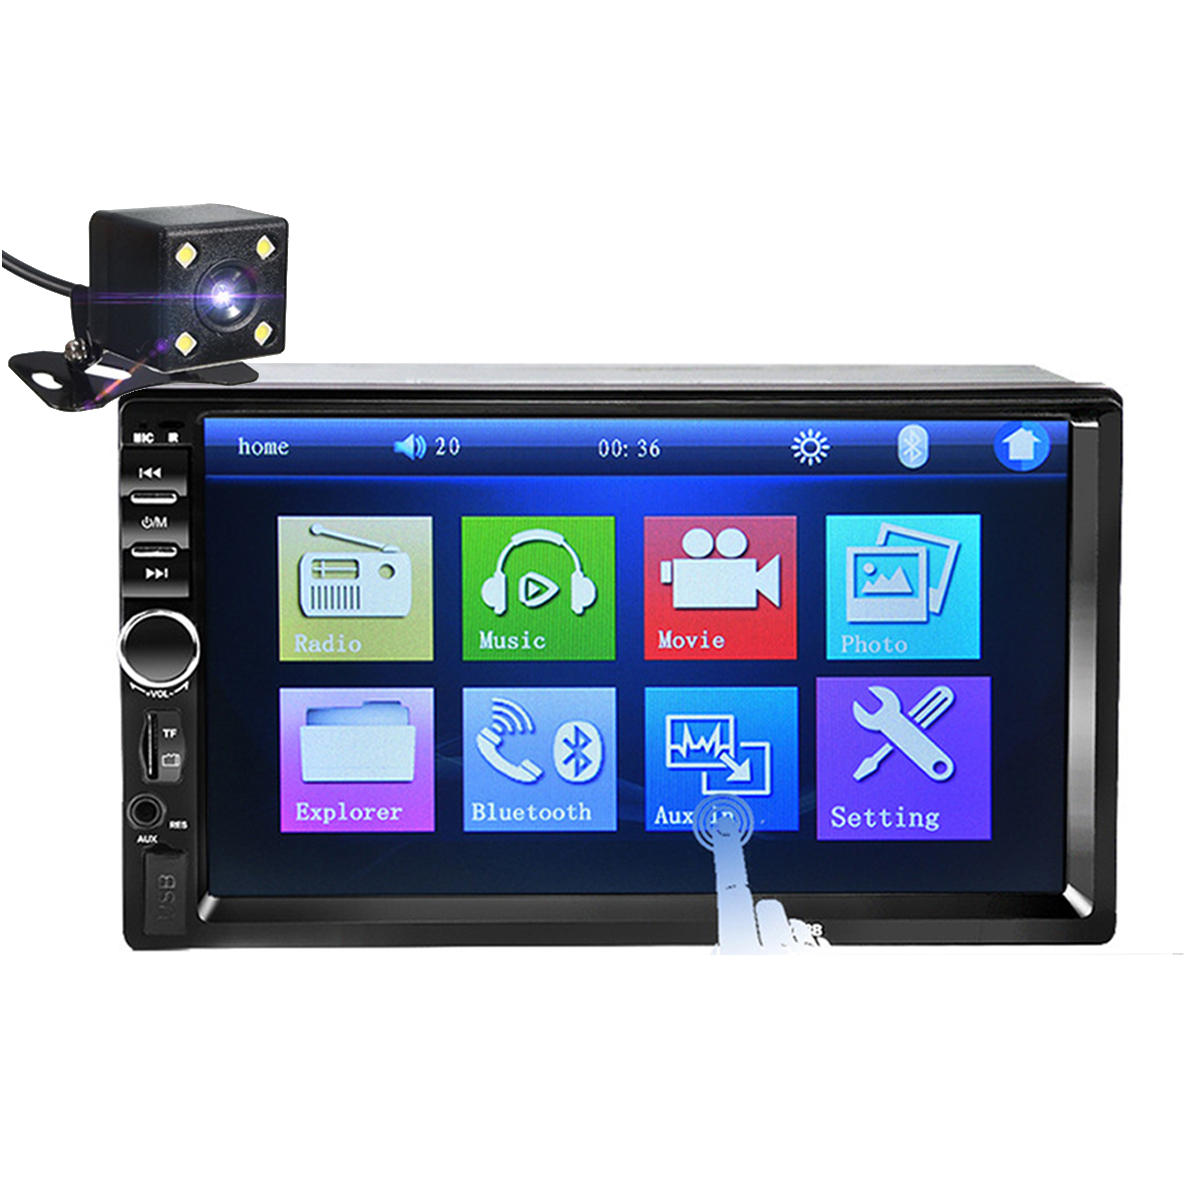 7/" HD MP3 MP5 Player Bluetooth FM Radio USB+GPS Navigation with Remote Control